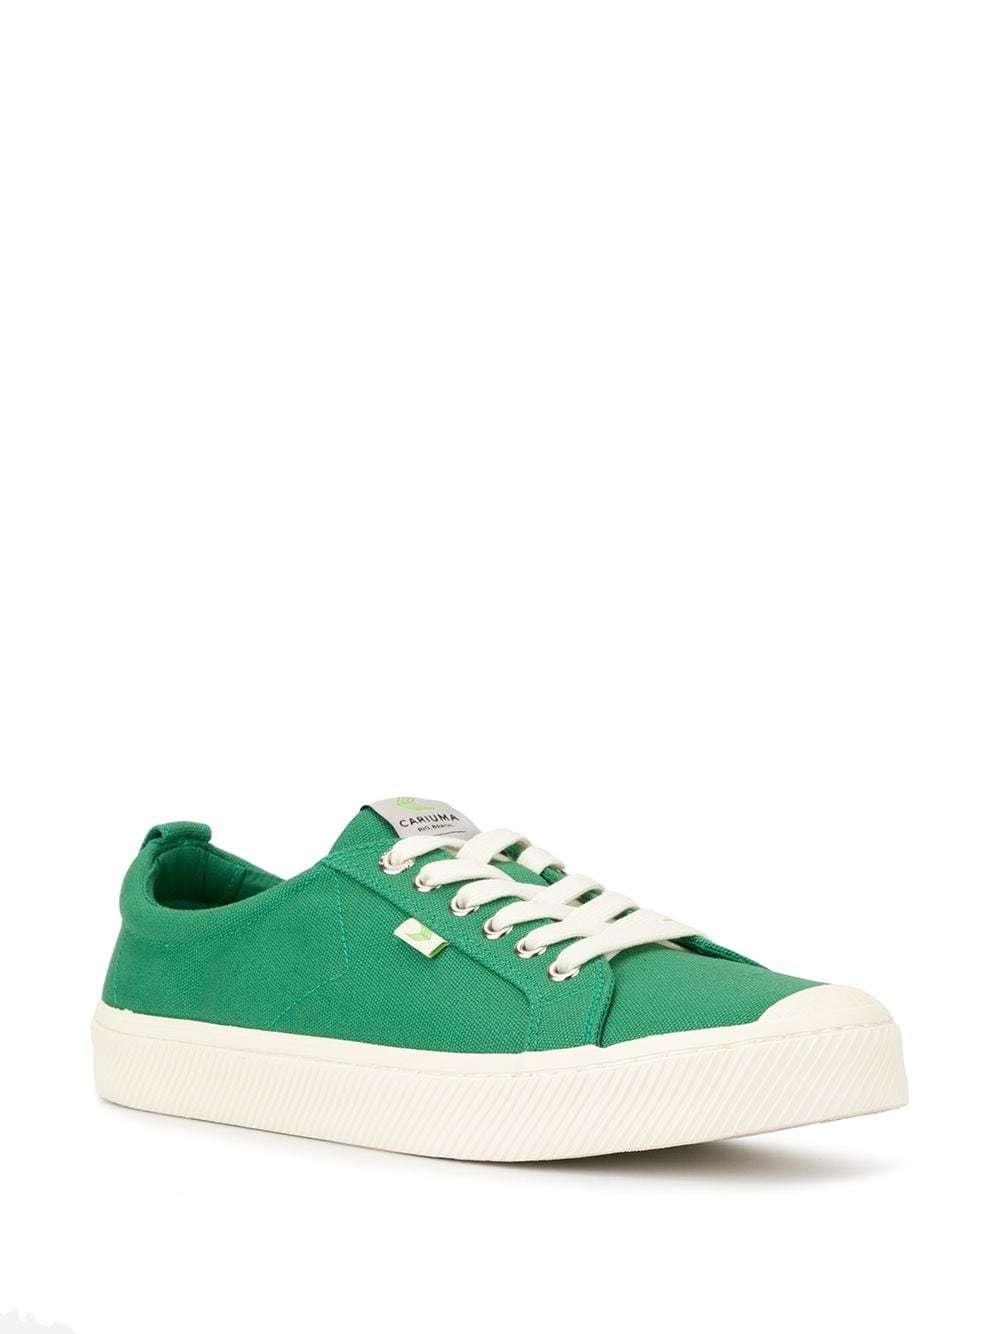 Cariuma Oca Low Green Canvas Sneaker, $79 | farfetch.com | Lookastic